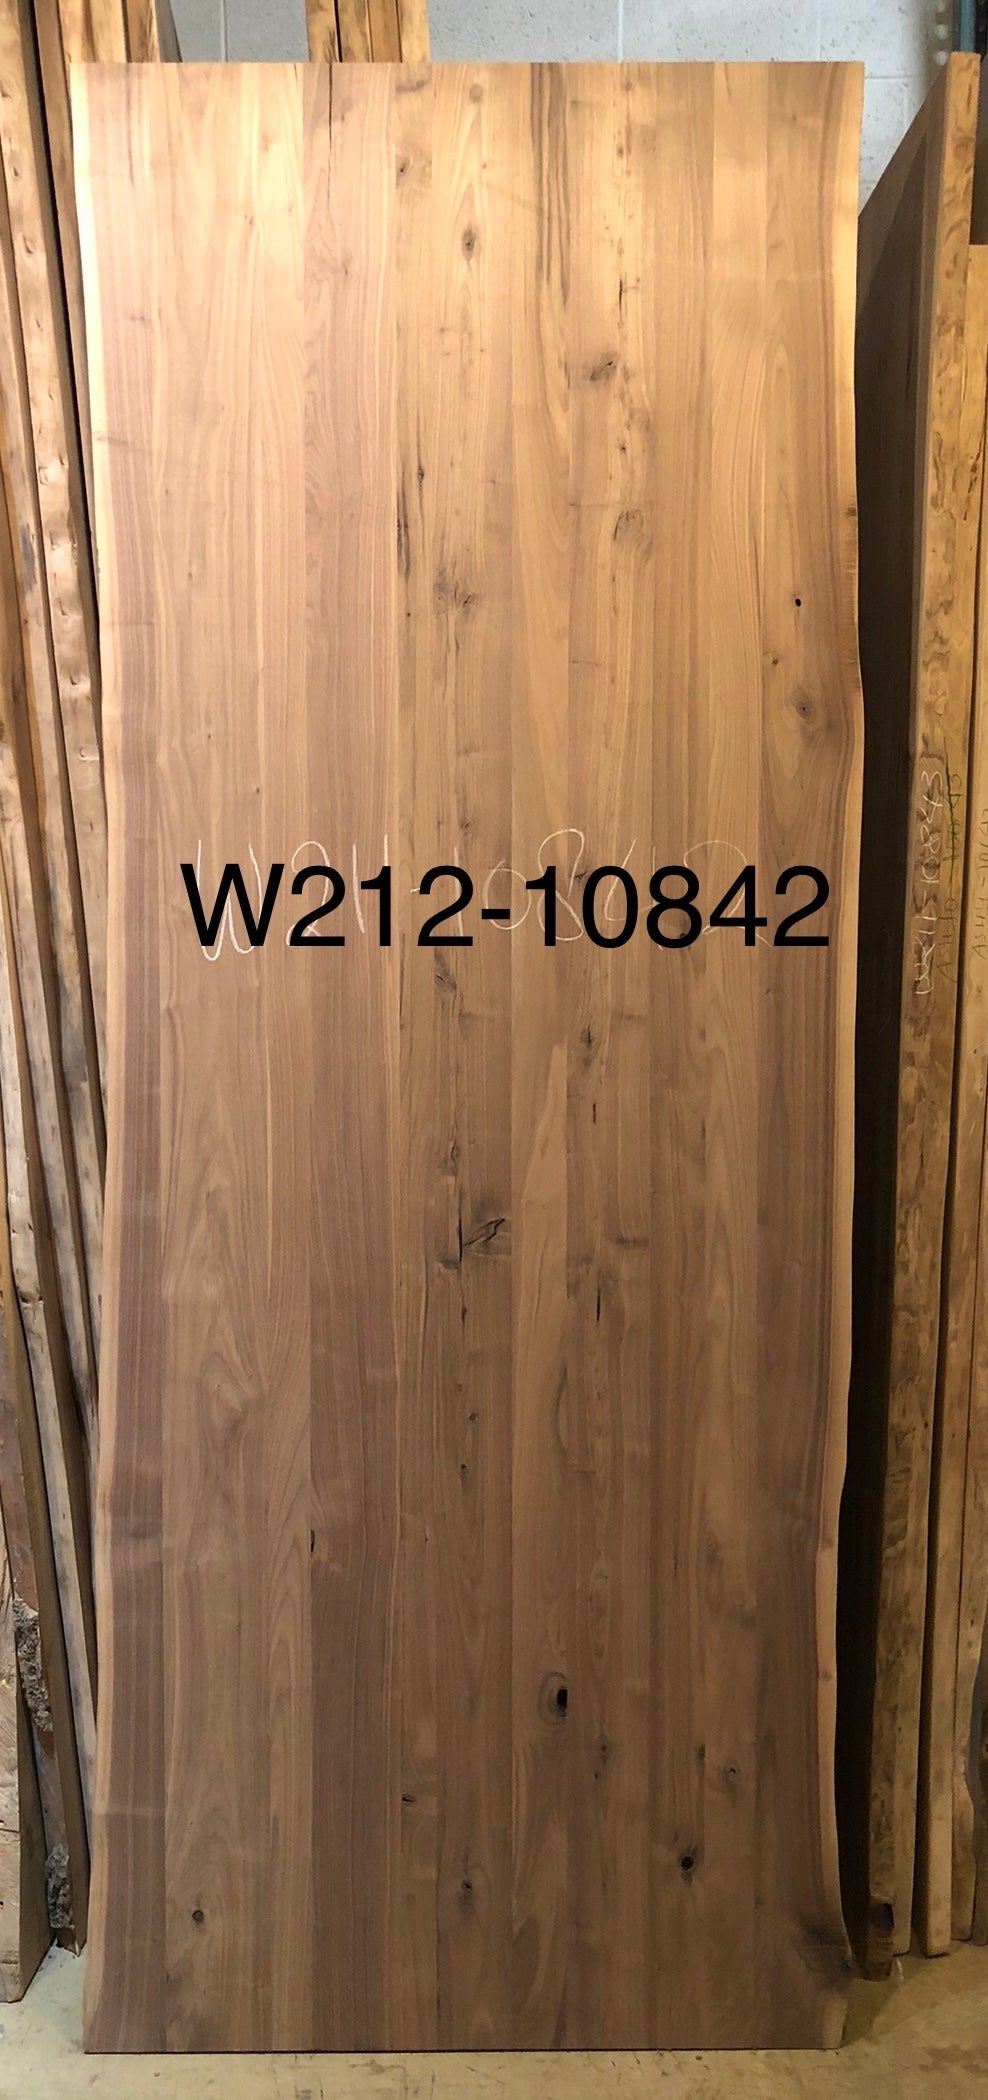 W212-10842 Live edge walnut wood 108x42